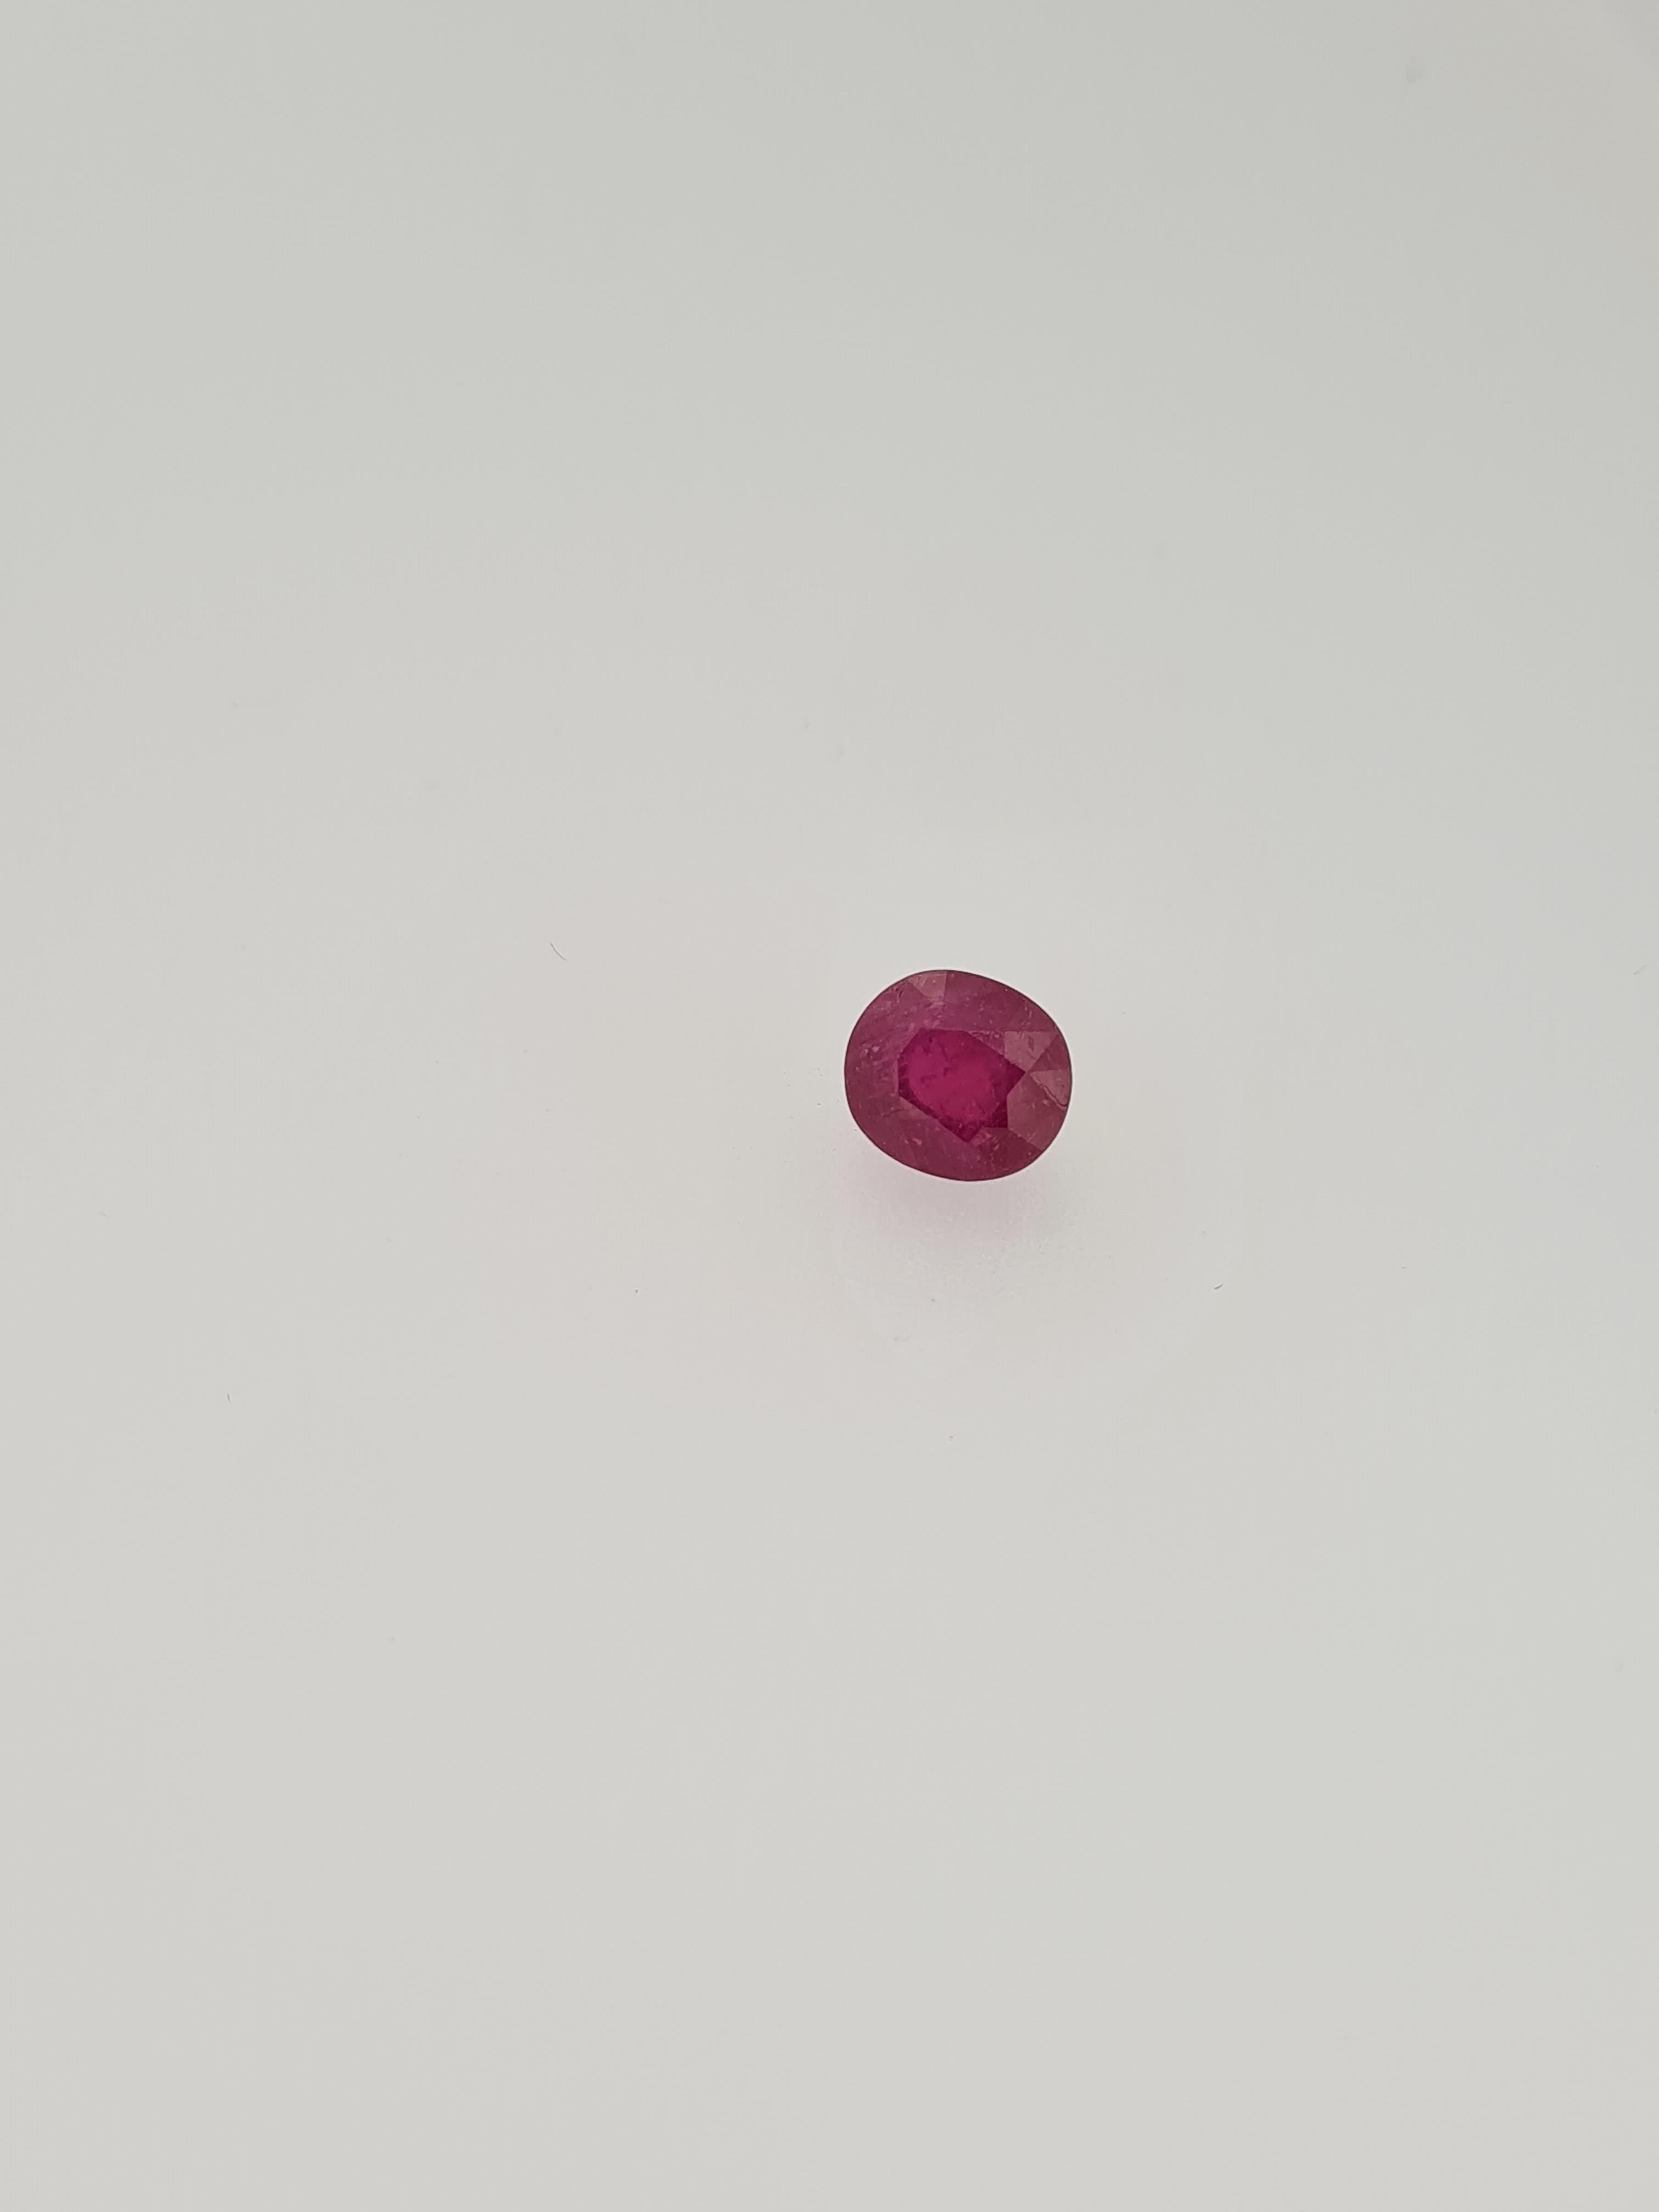 Ruby oval cut gem stone - Image 5 of 6